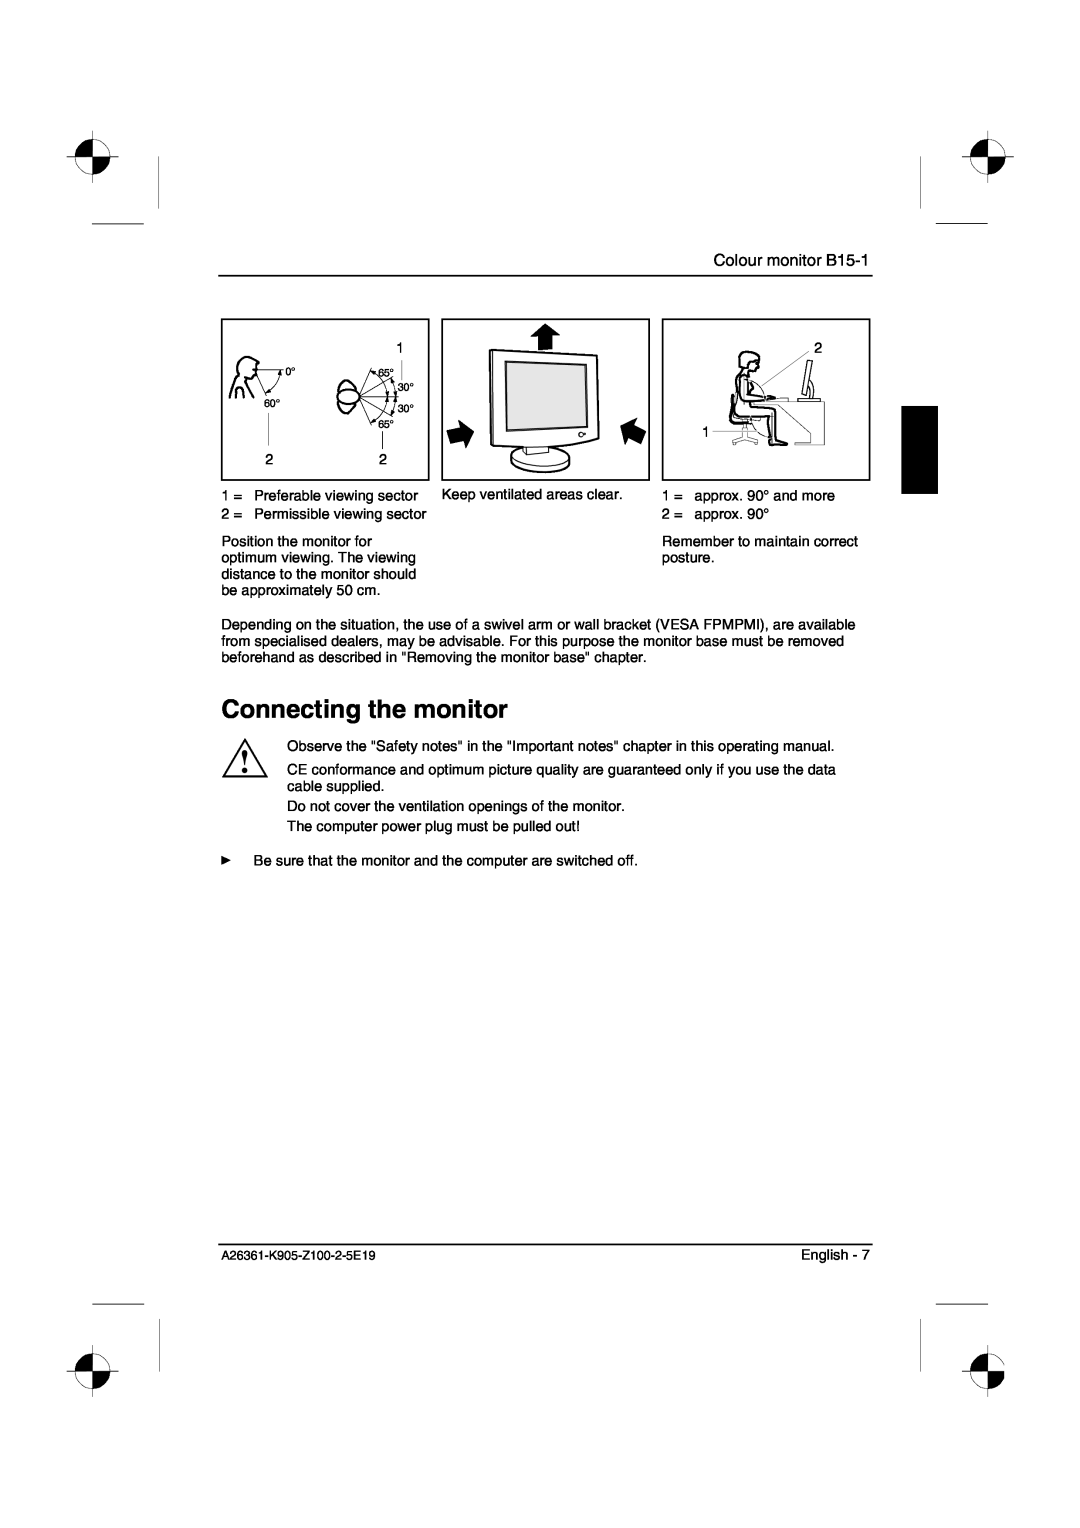 Fujitsu Siemens Computers manual Connecting the monitor, Colour monitor B15-1 